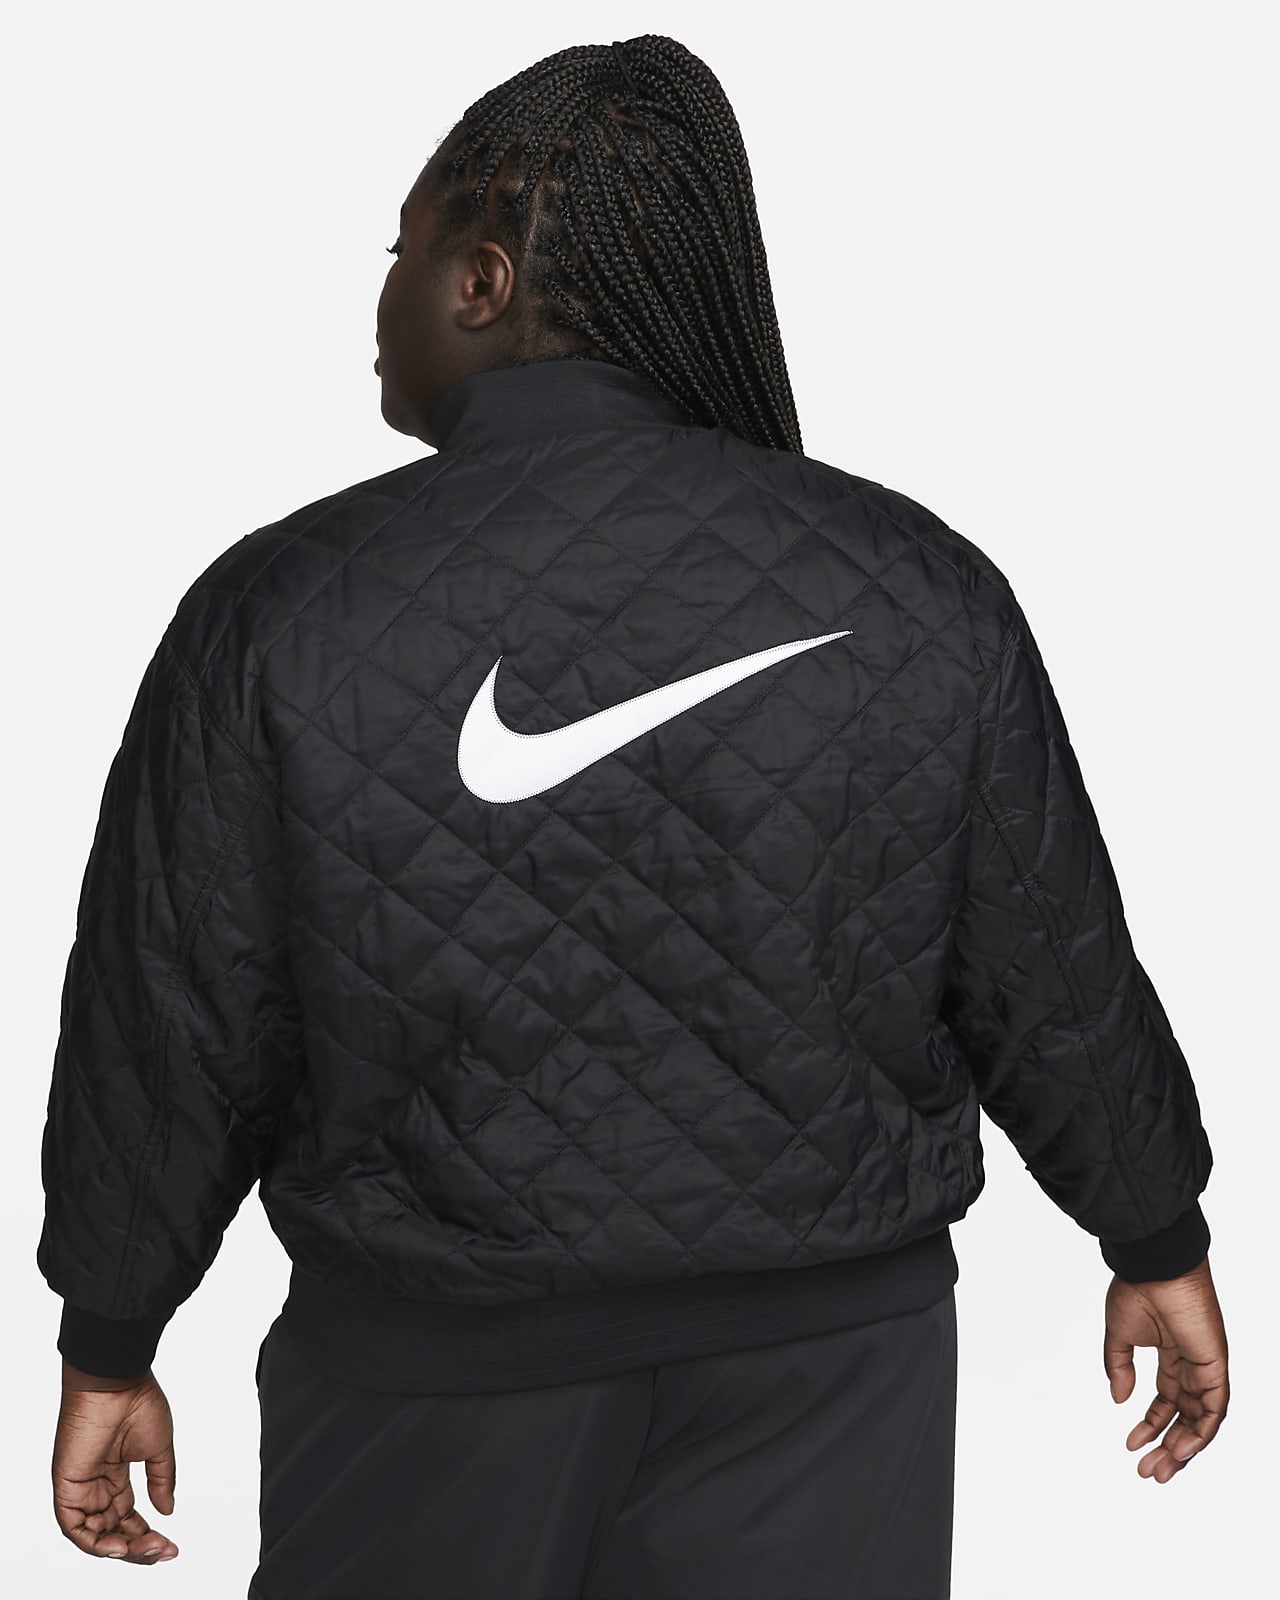 Nike Sportswear Womens XXL Pullover Jacket Black Bomber New CZ9366-010 for  Sale in Beaverton, OR - OfferUp